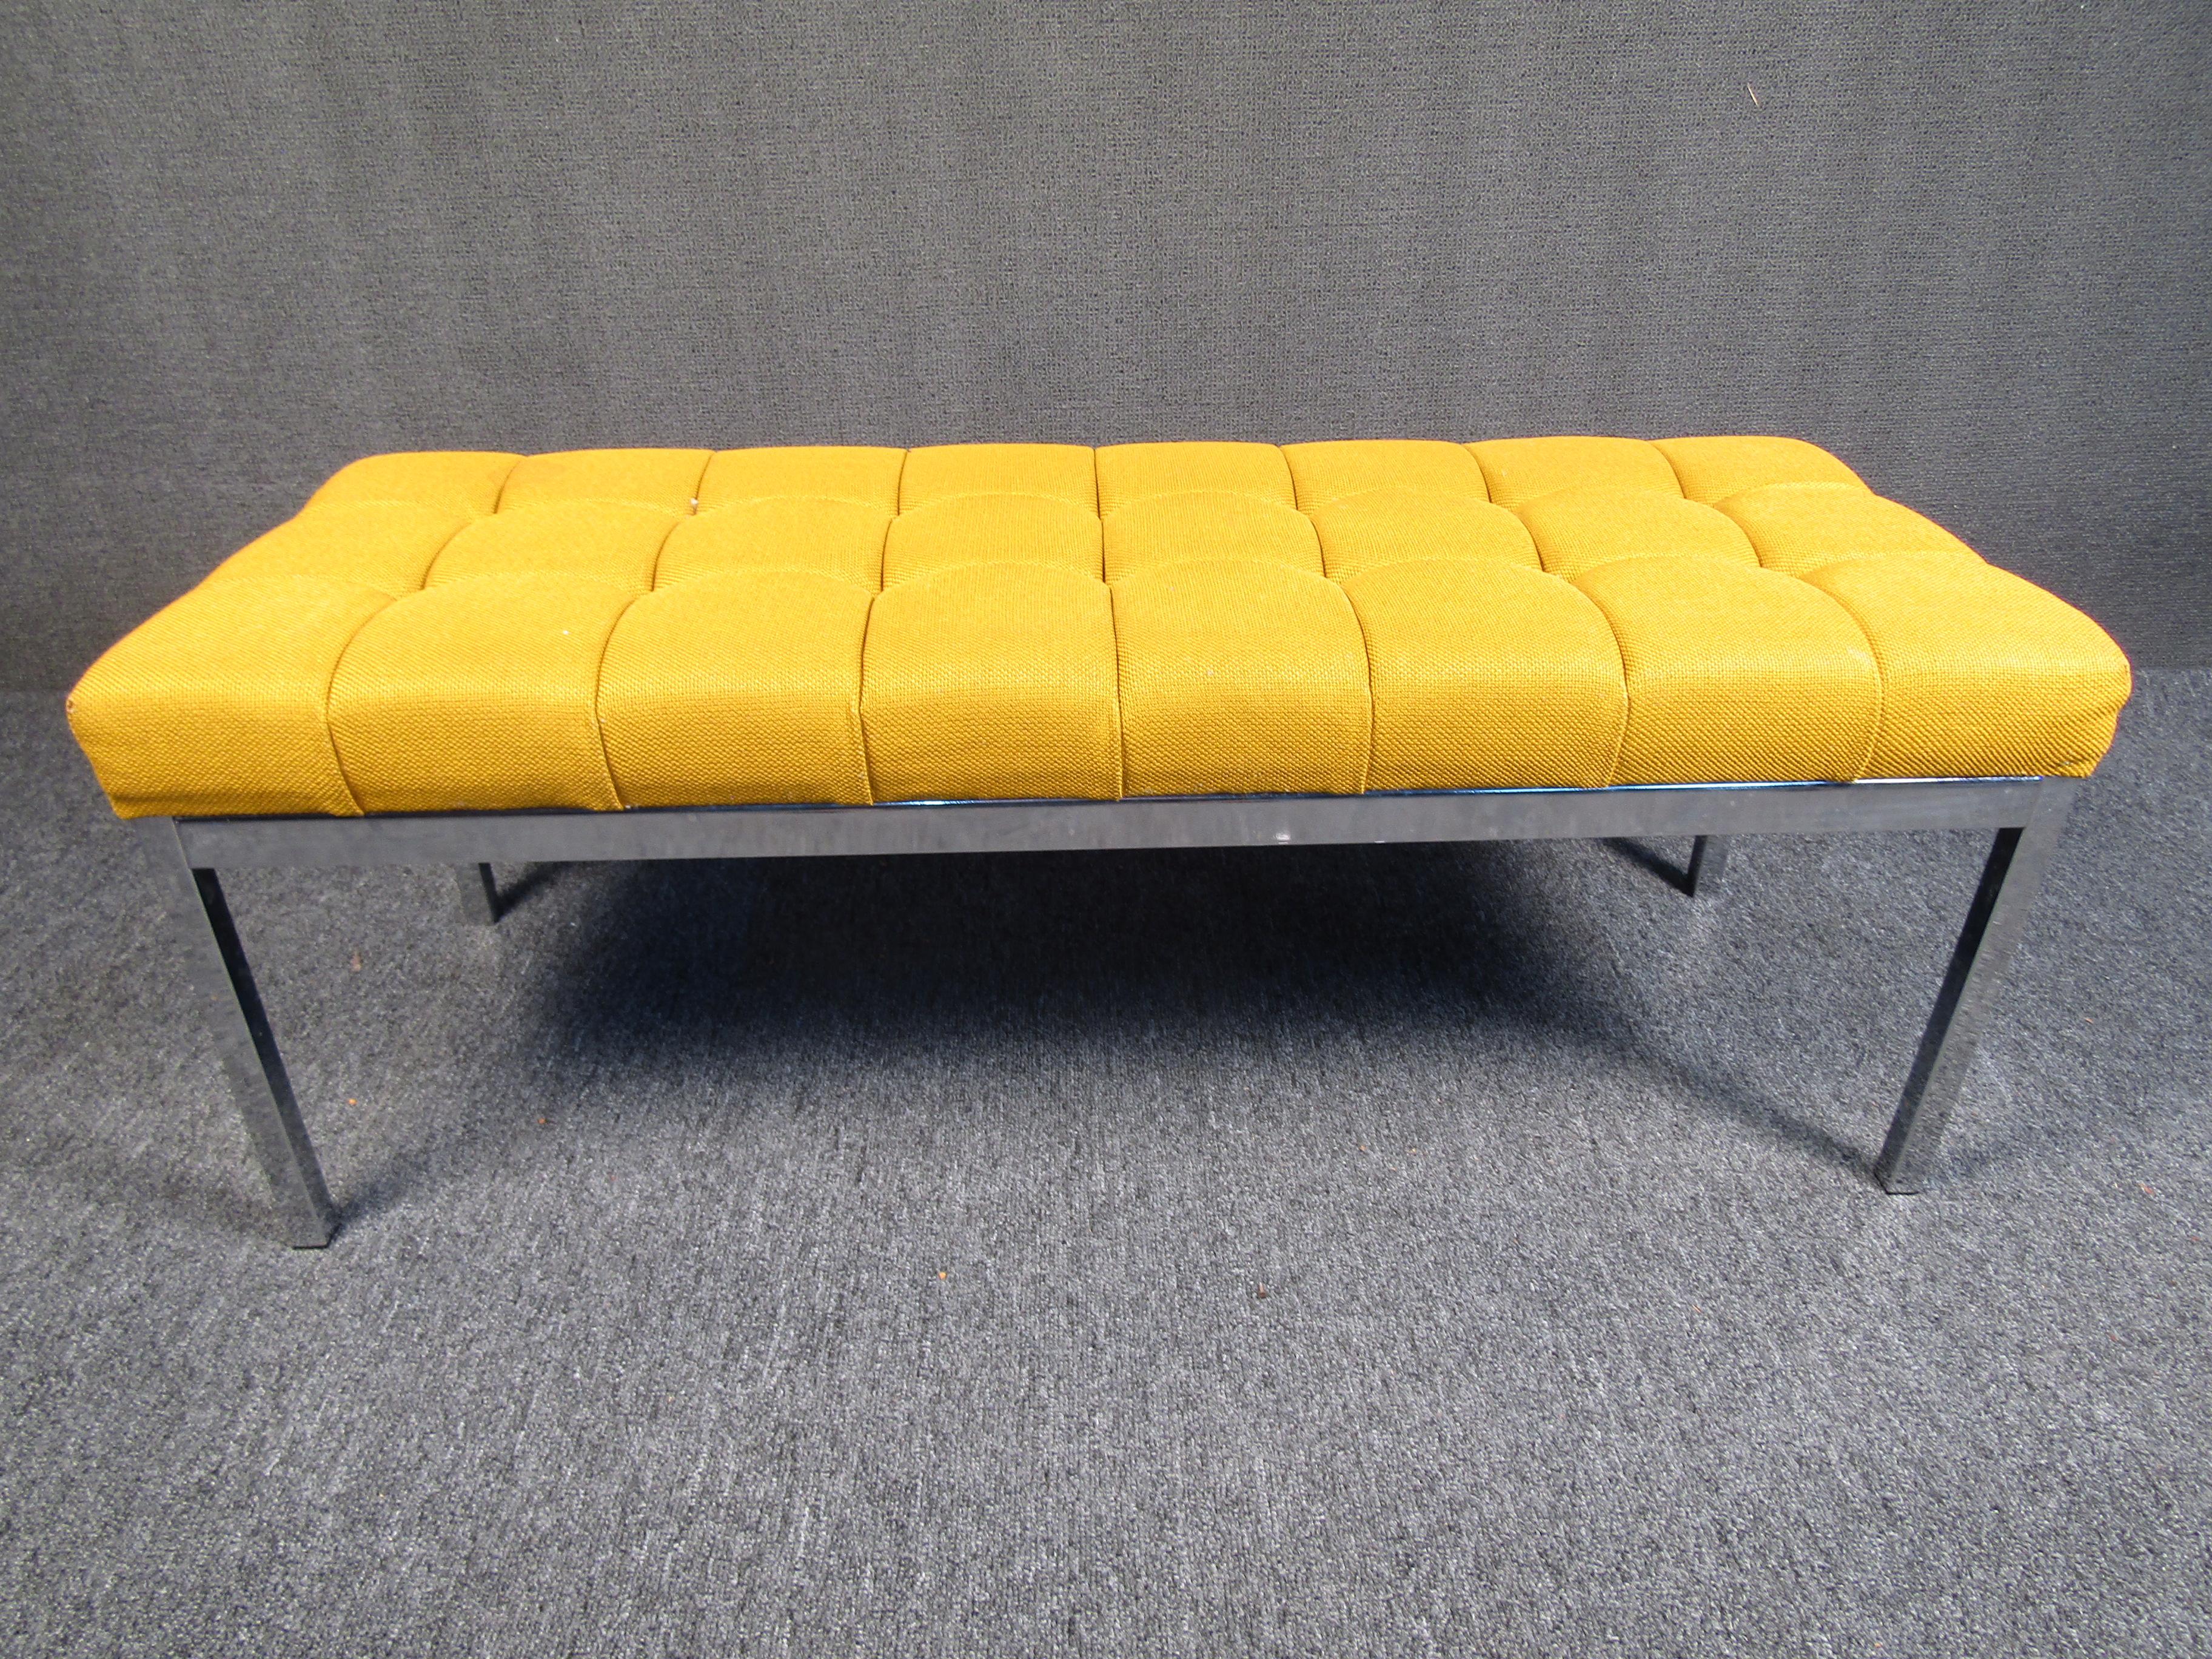 yellow bench seat